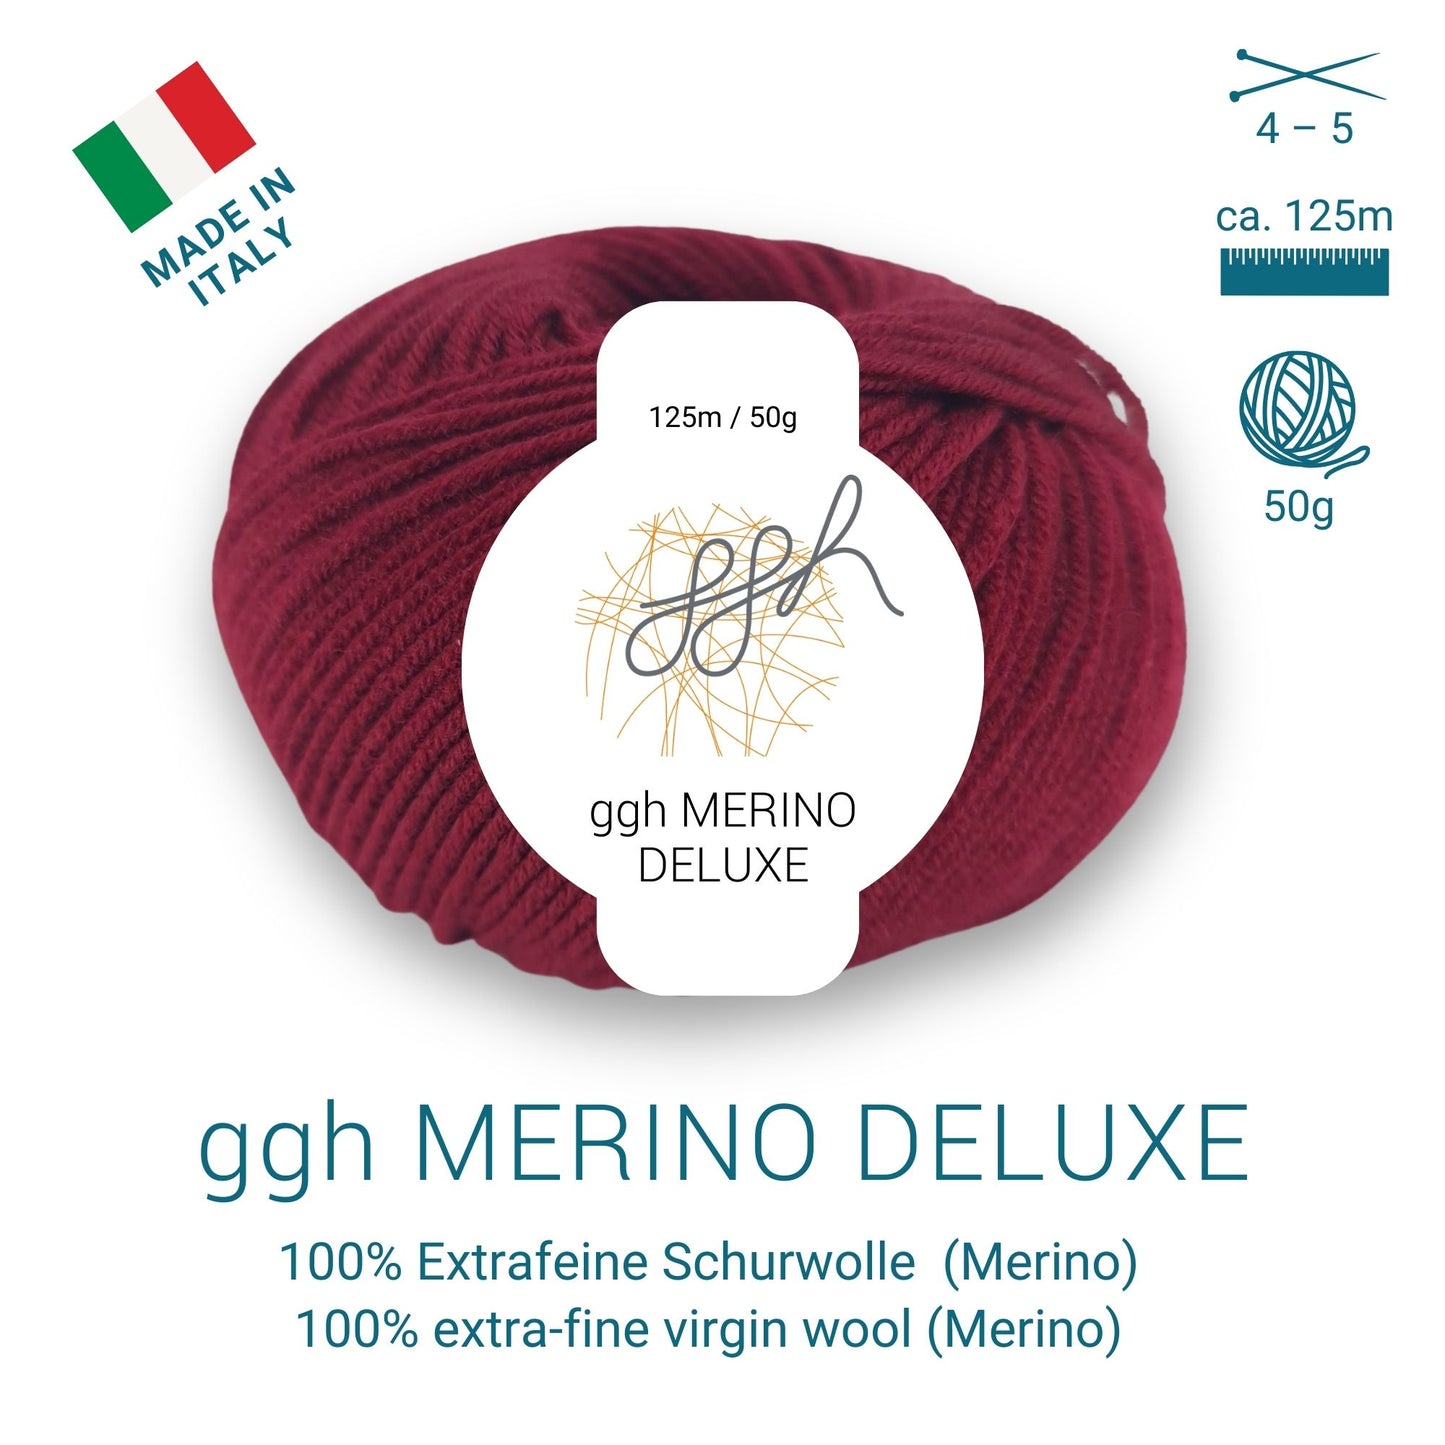 ggh Merino Deluxe - 300g set (6x50g) - 010 - Bordeaux red 